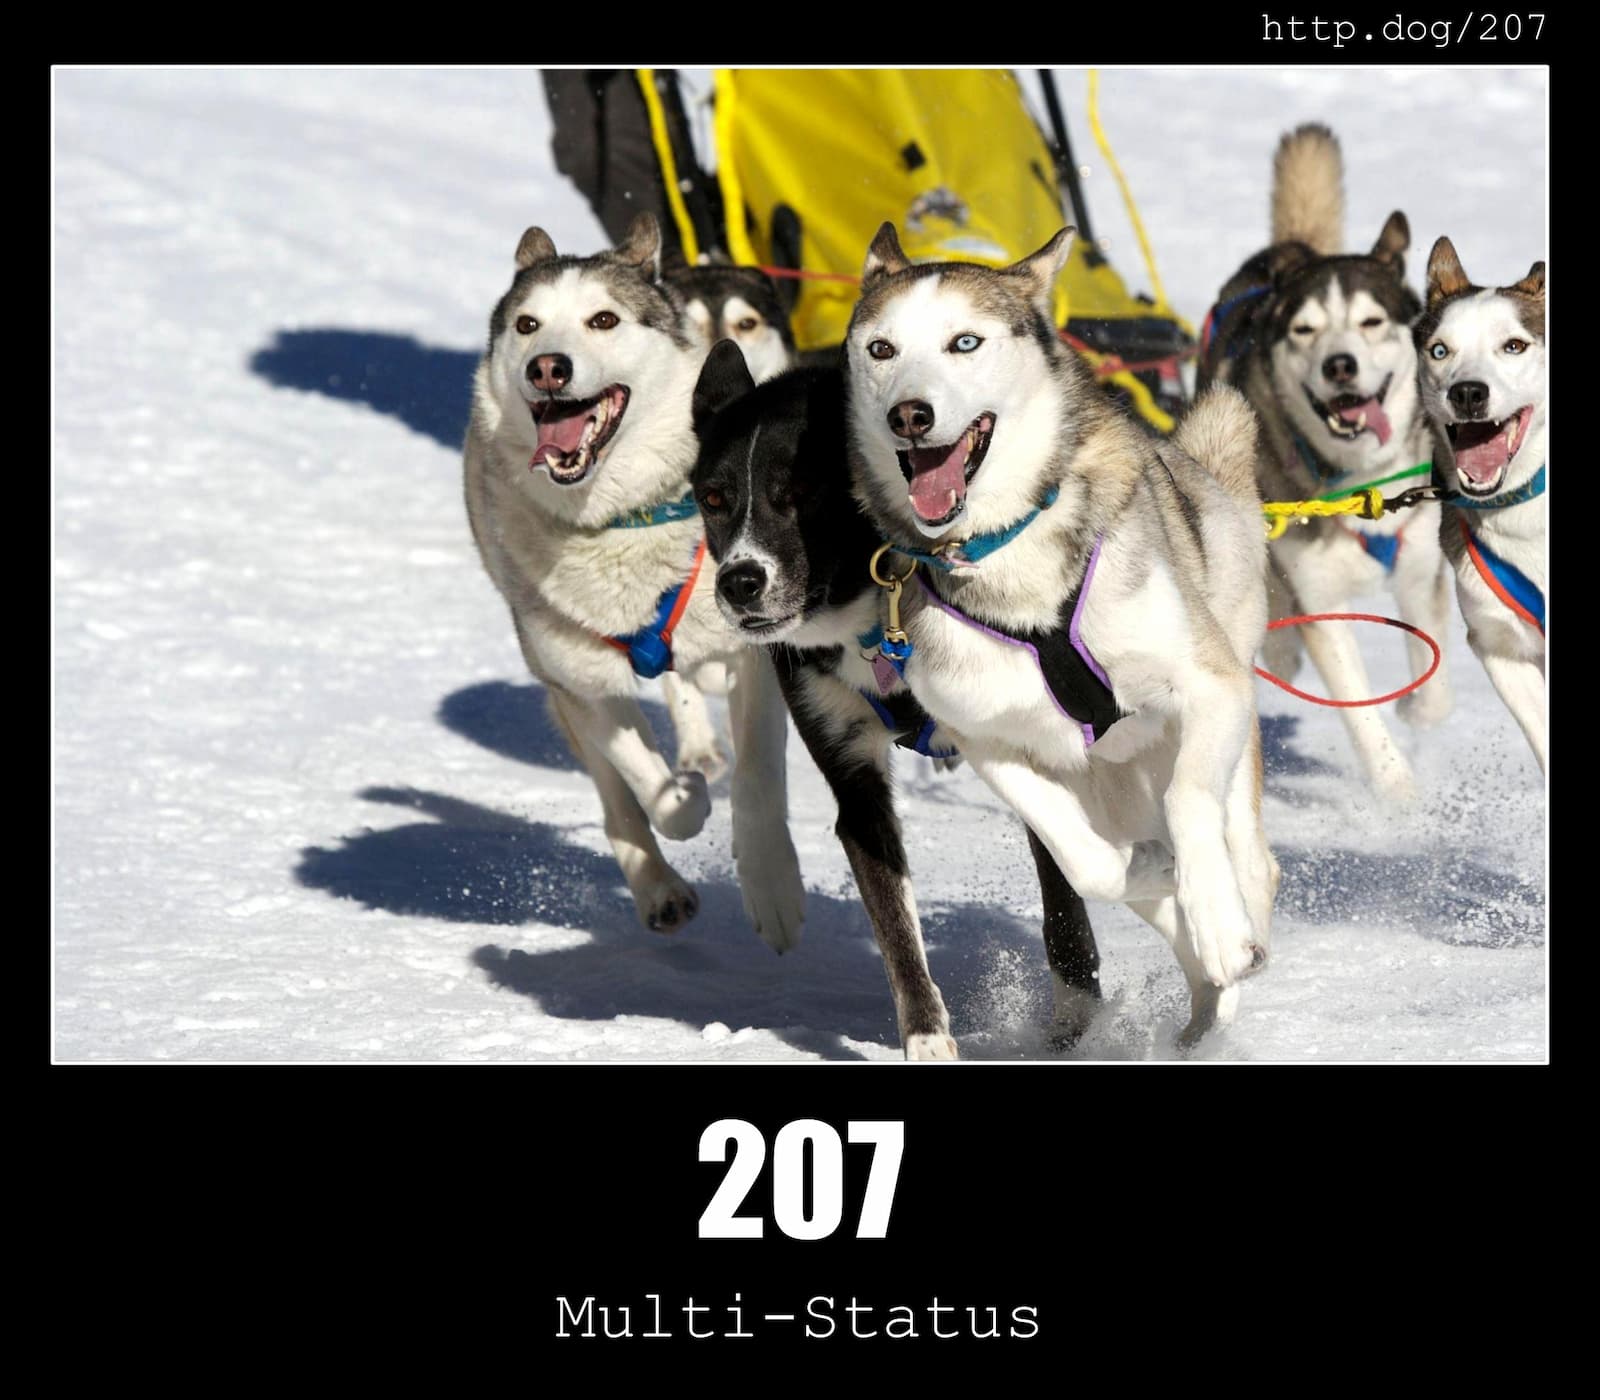 HTTP Status Code 207 Multi-Status & Dogs